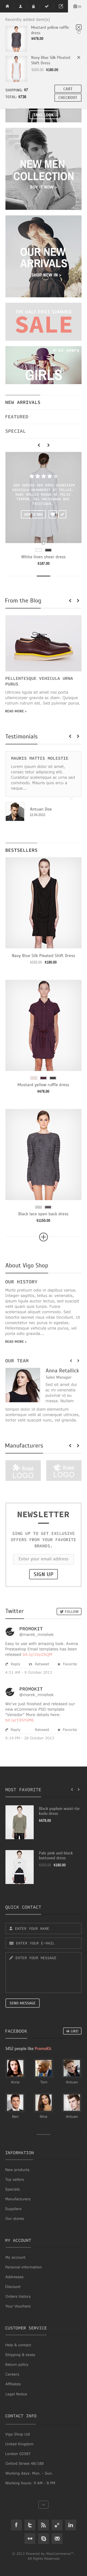 Vigo Shop - Responsive Bootstrap eCommerce PSD